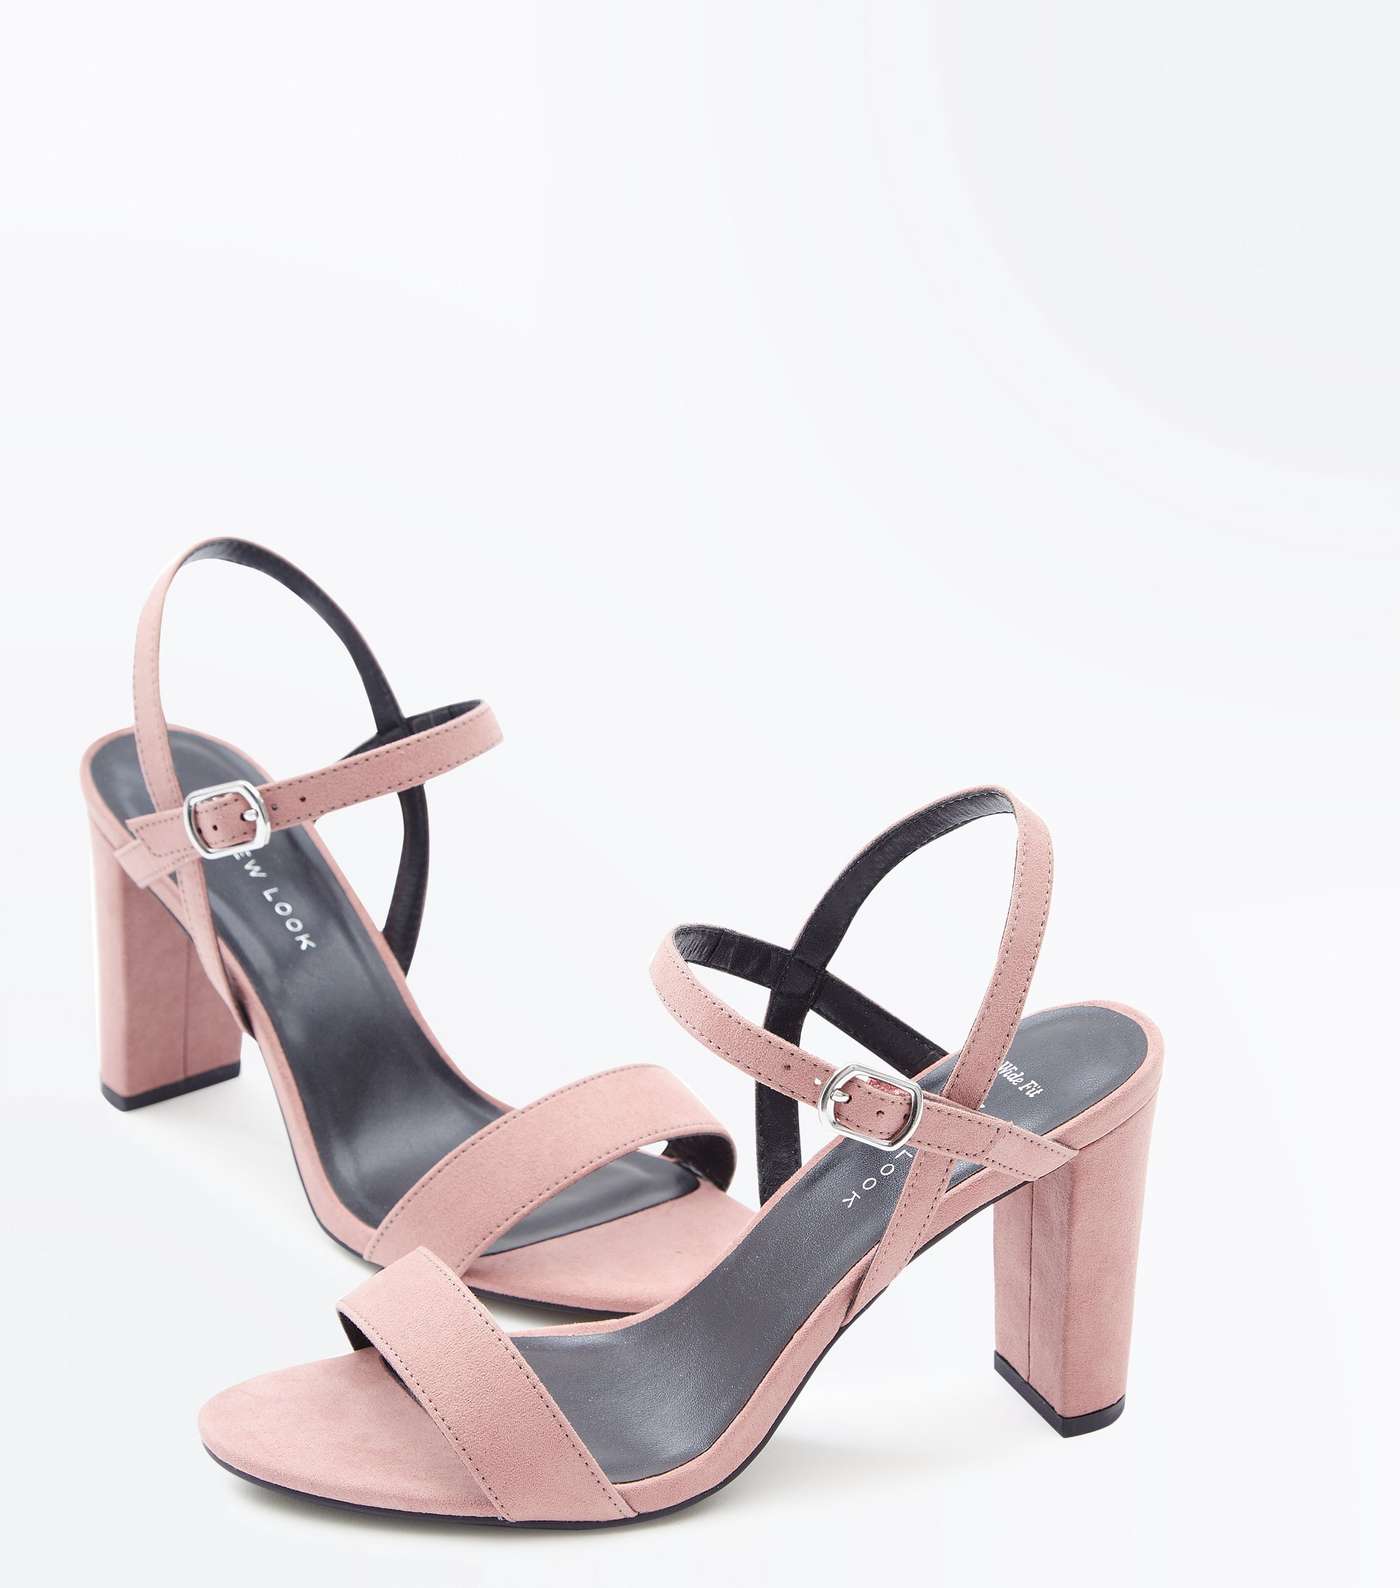 Wide Fit Pale Pink Suedette Cross Strap Side Heels Image 5